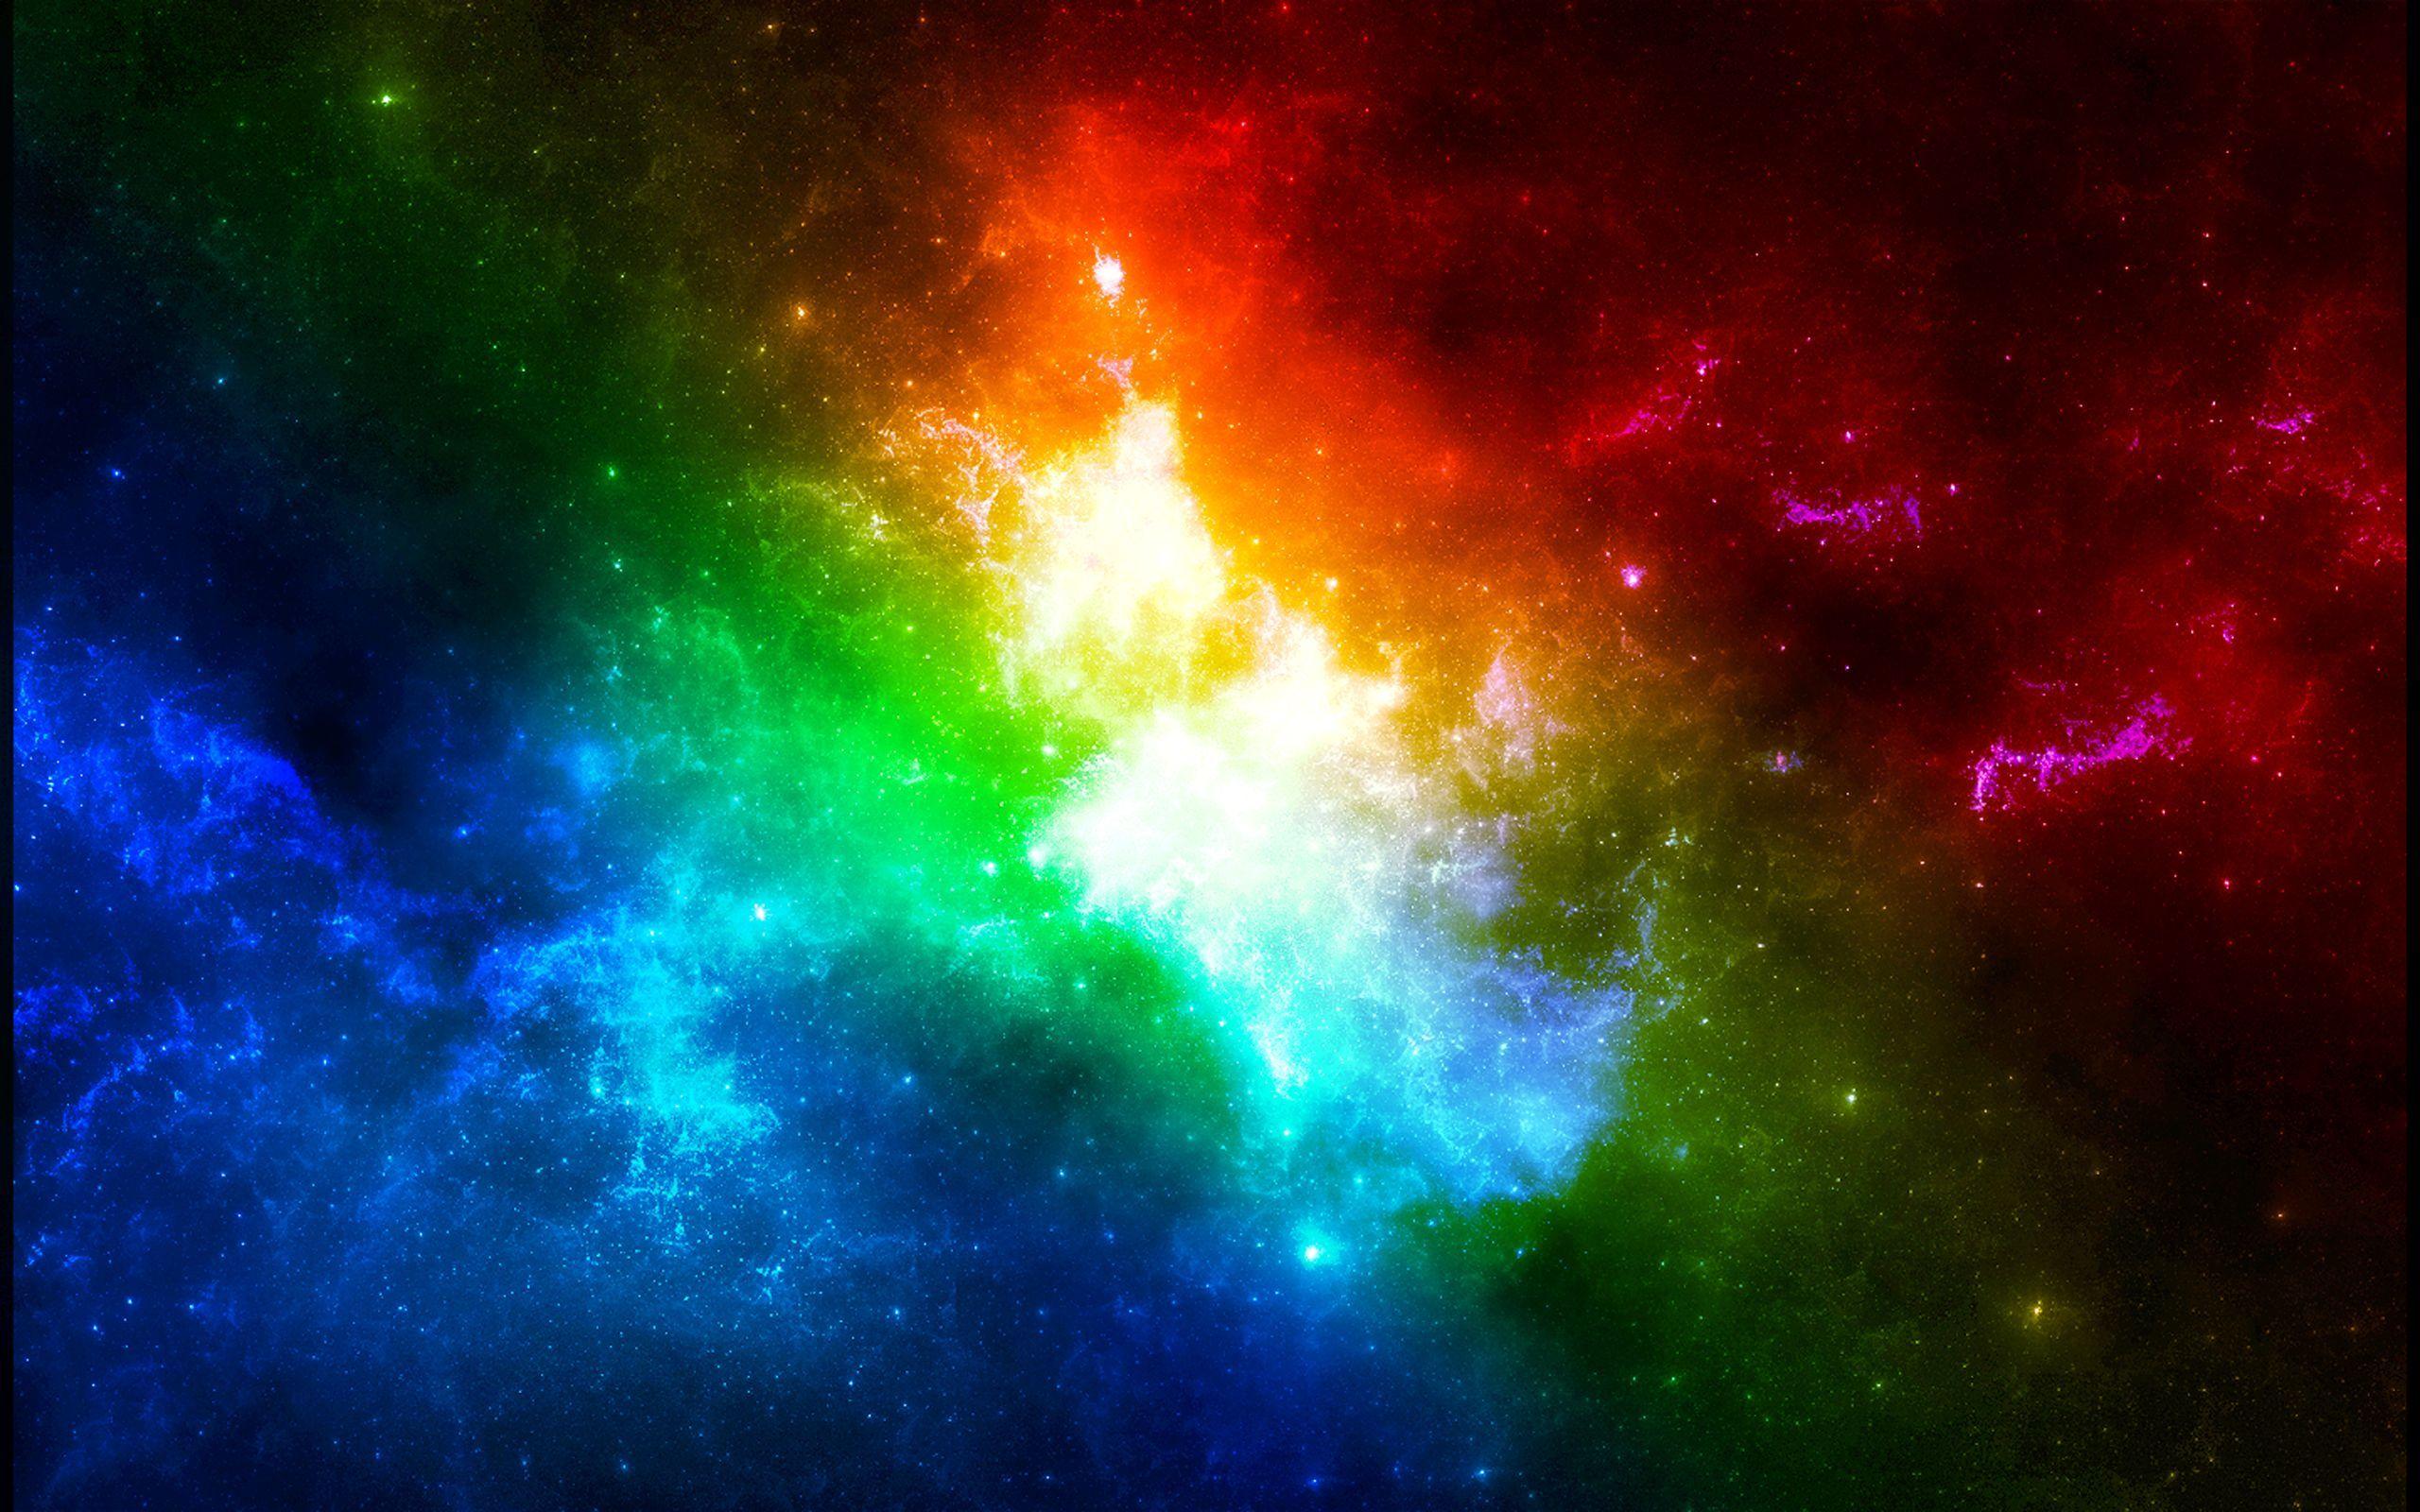 Free Colorful Galaxy Wallpaper Full HD. Galaxy wallpaper, Galaxy